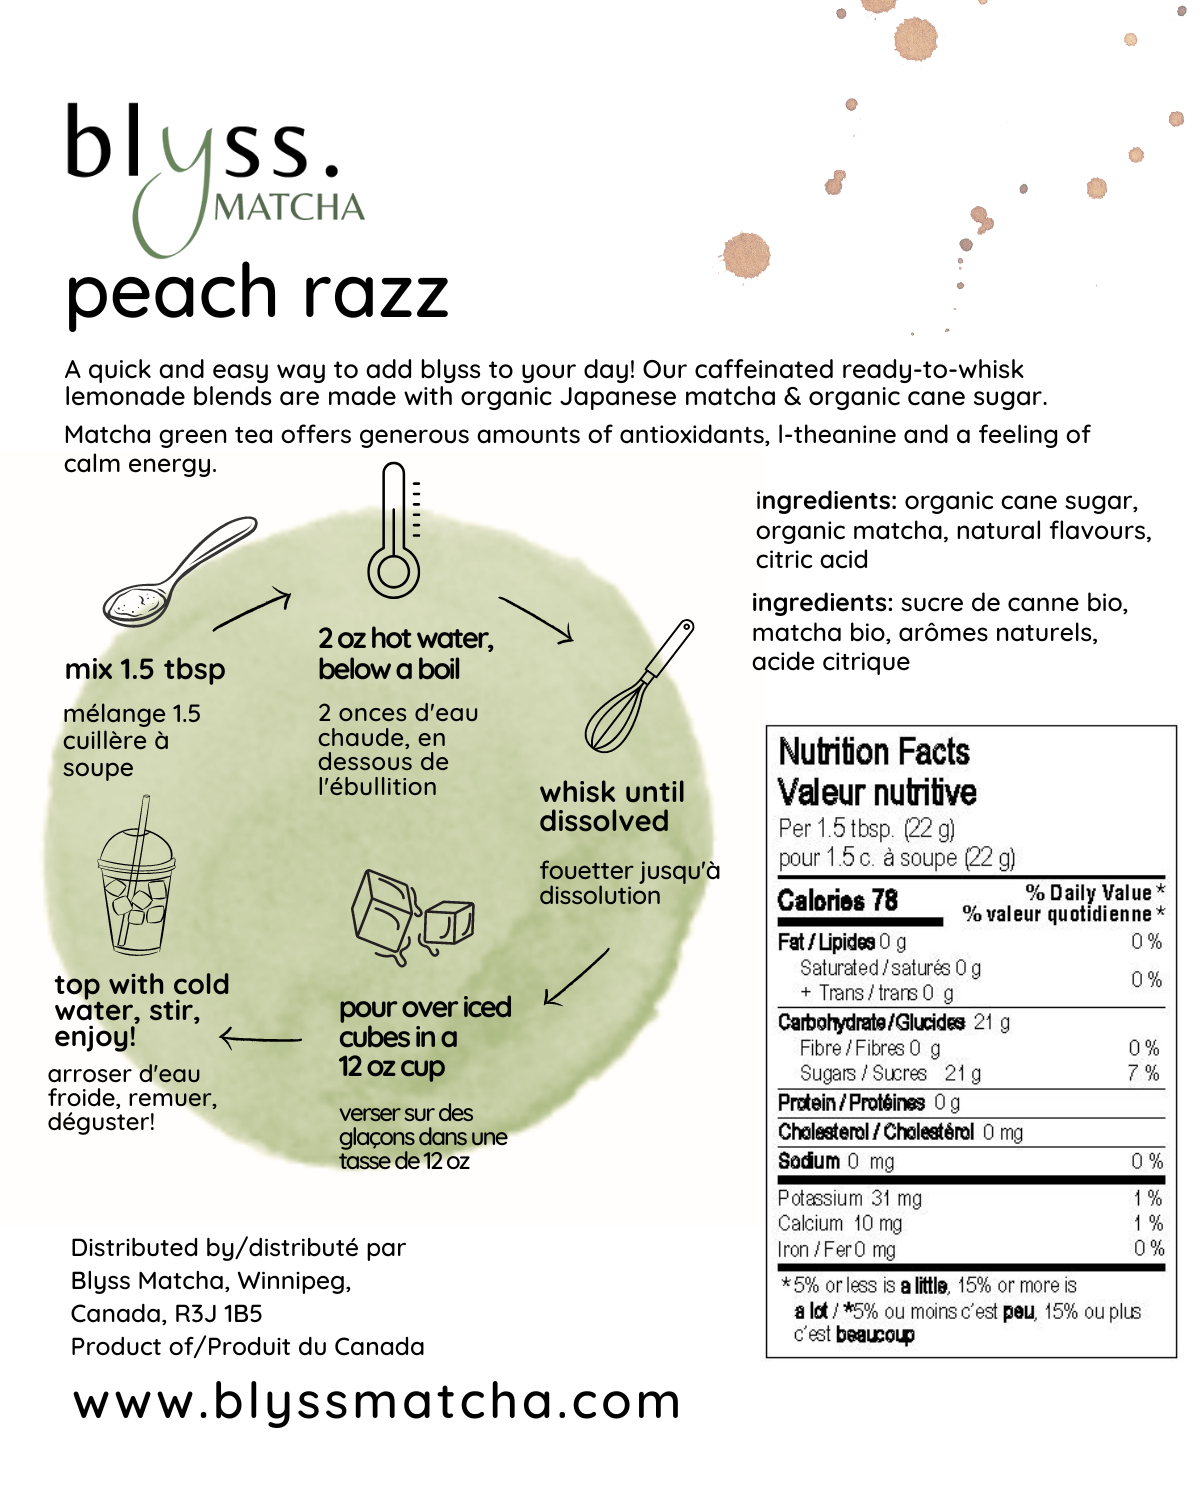 Peach Razz